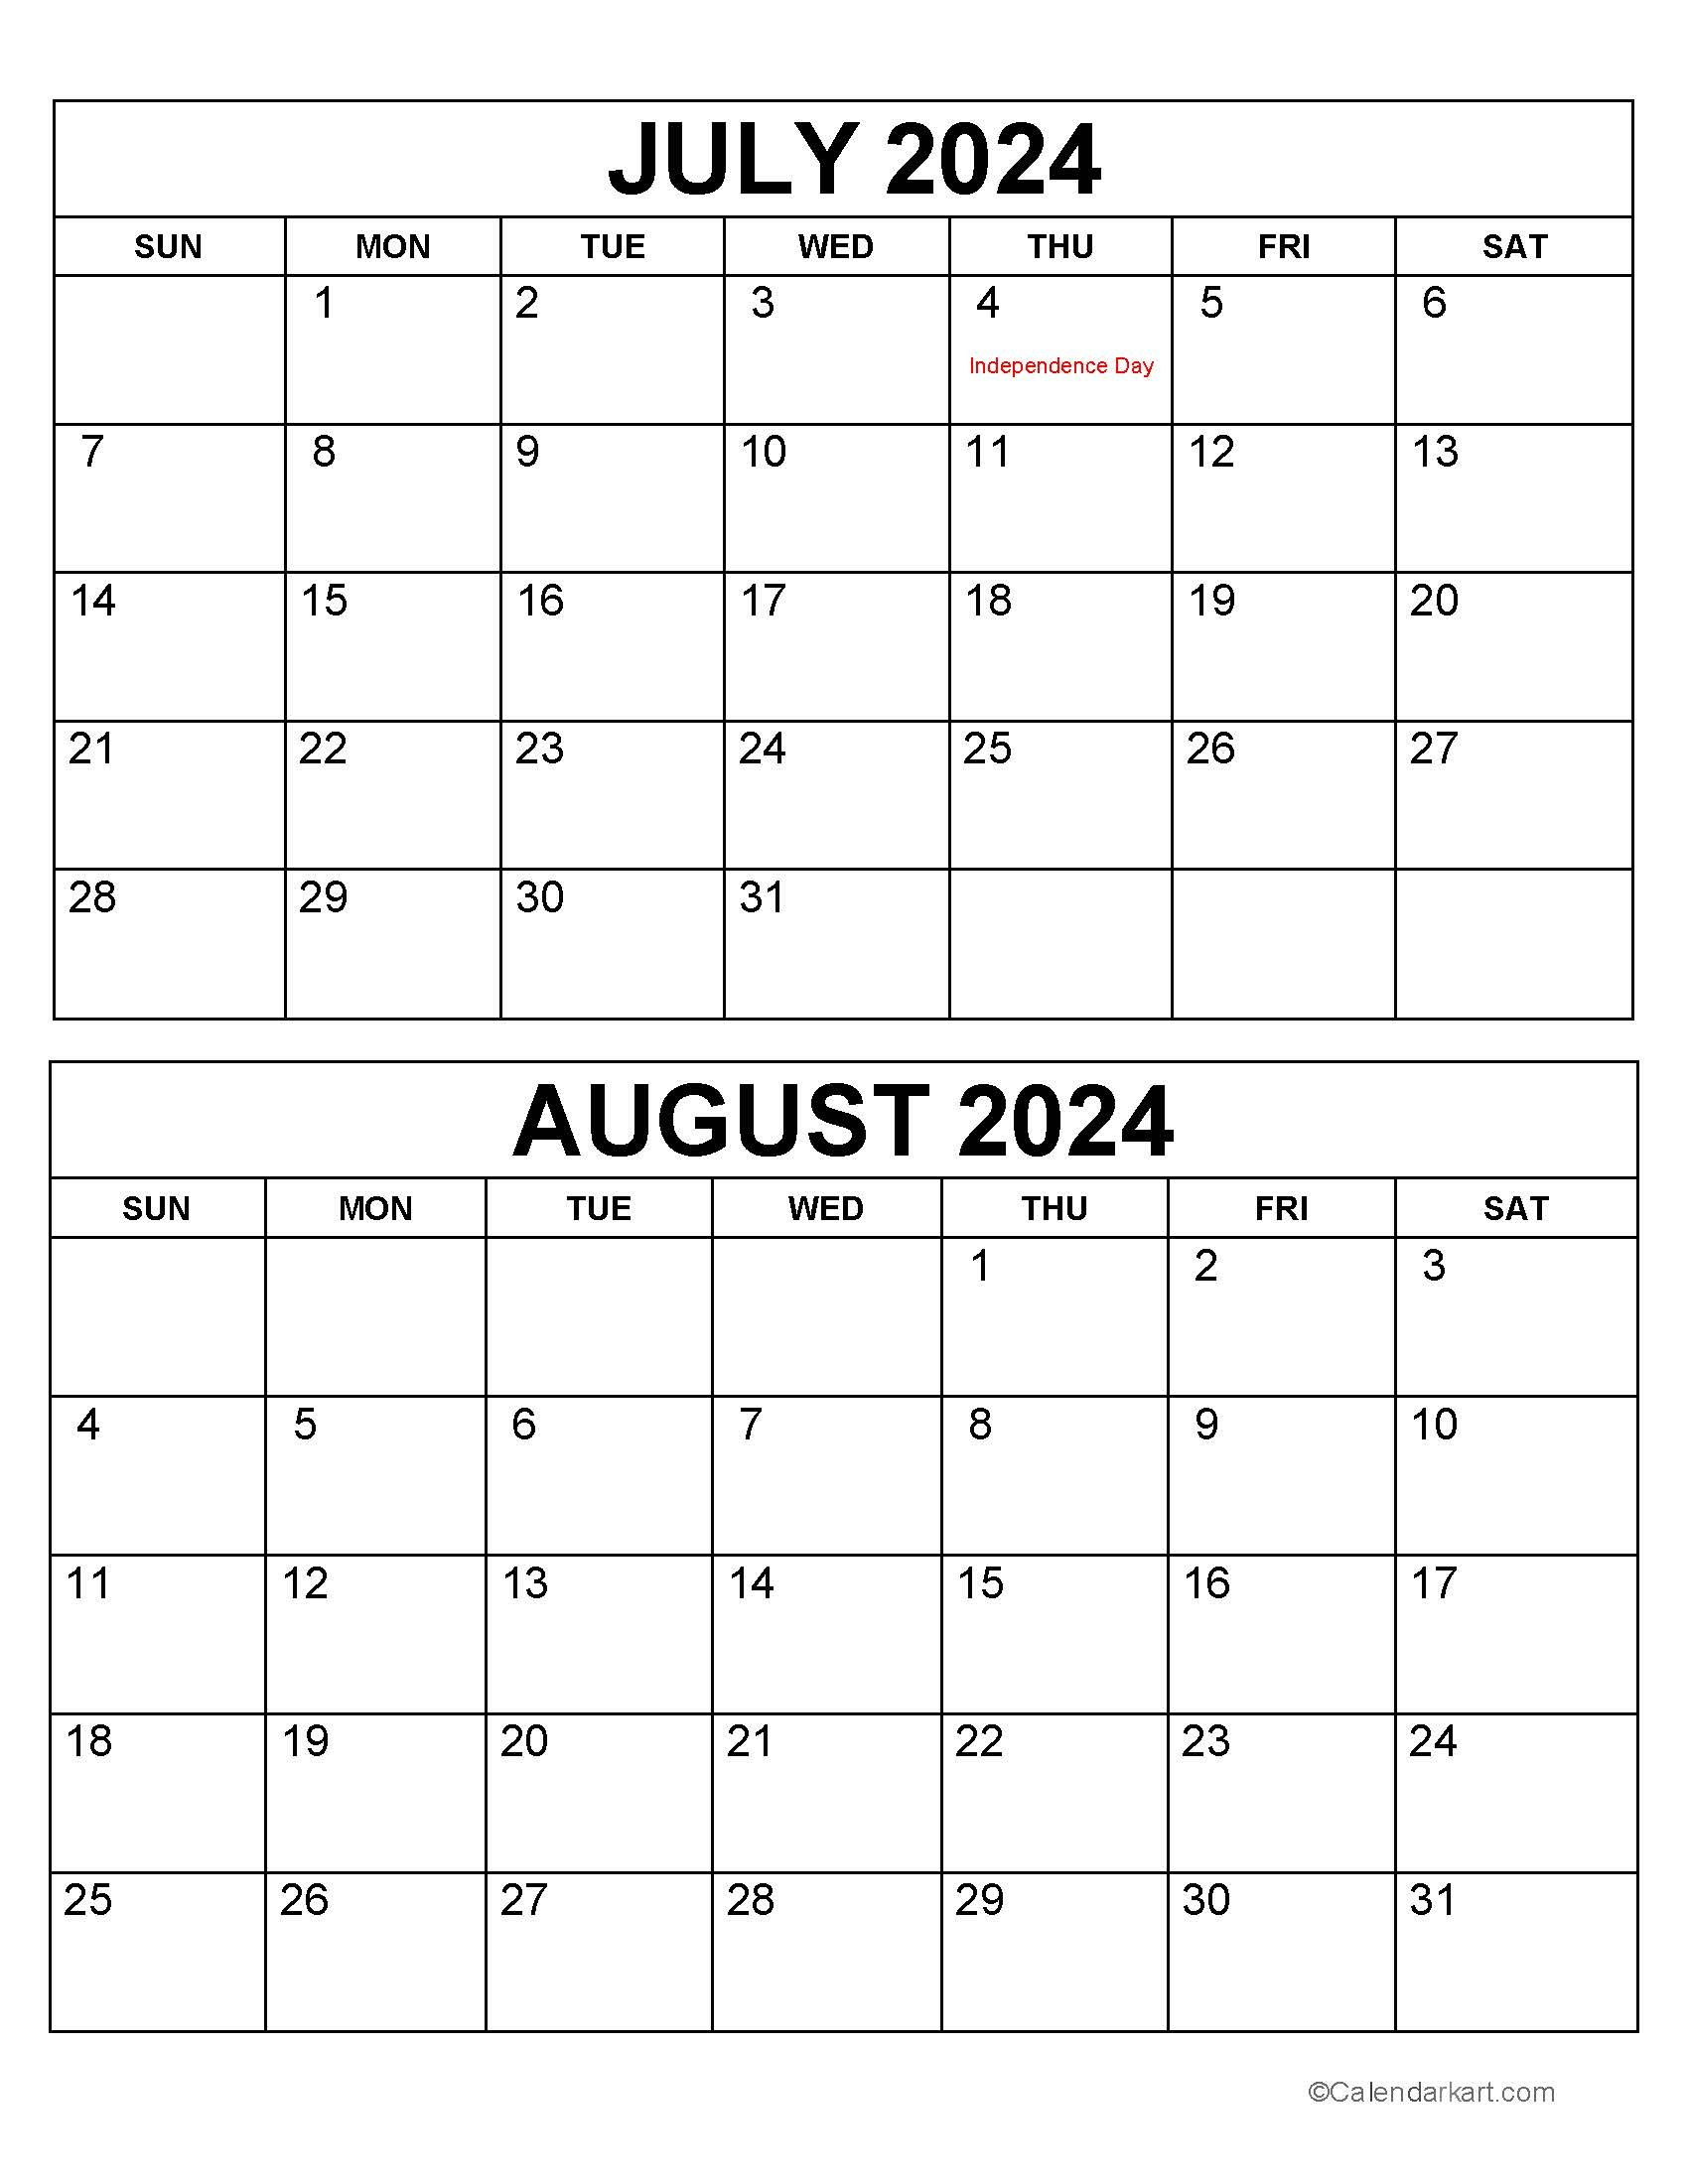 Printable July August 2024 Calendar | Calendarkart within July-August 2024 Calendar